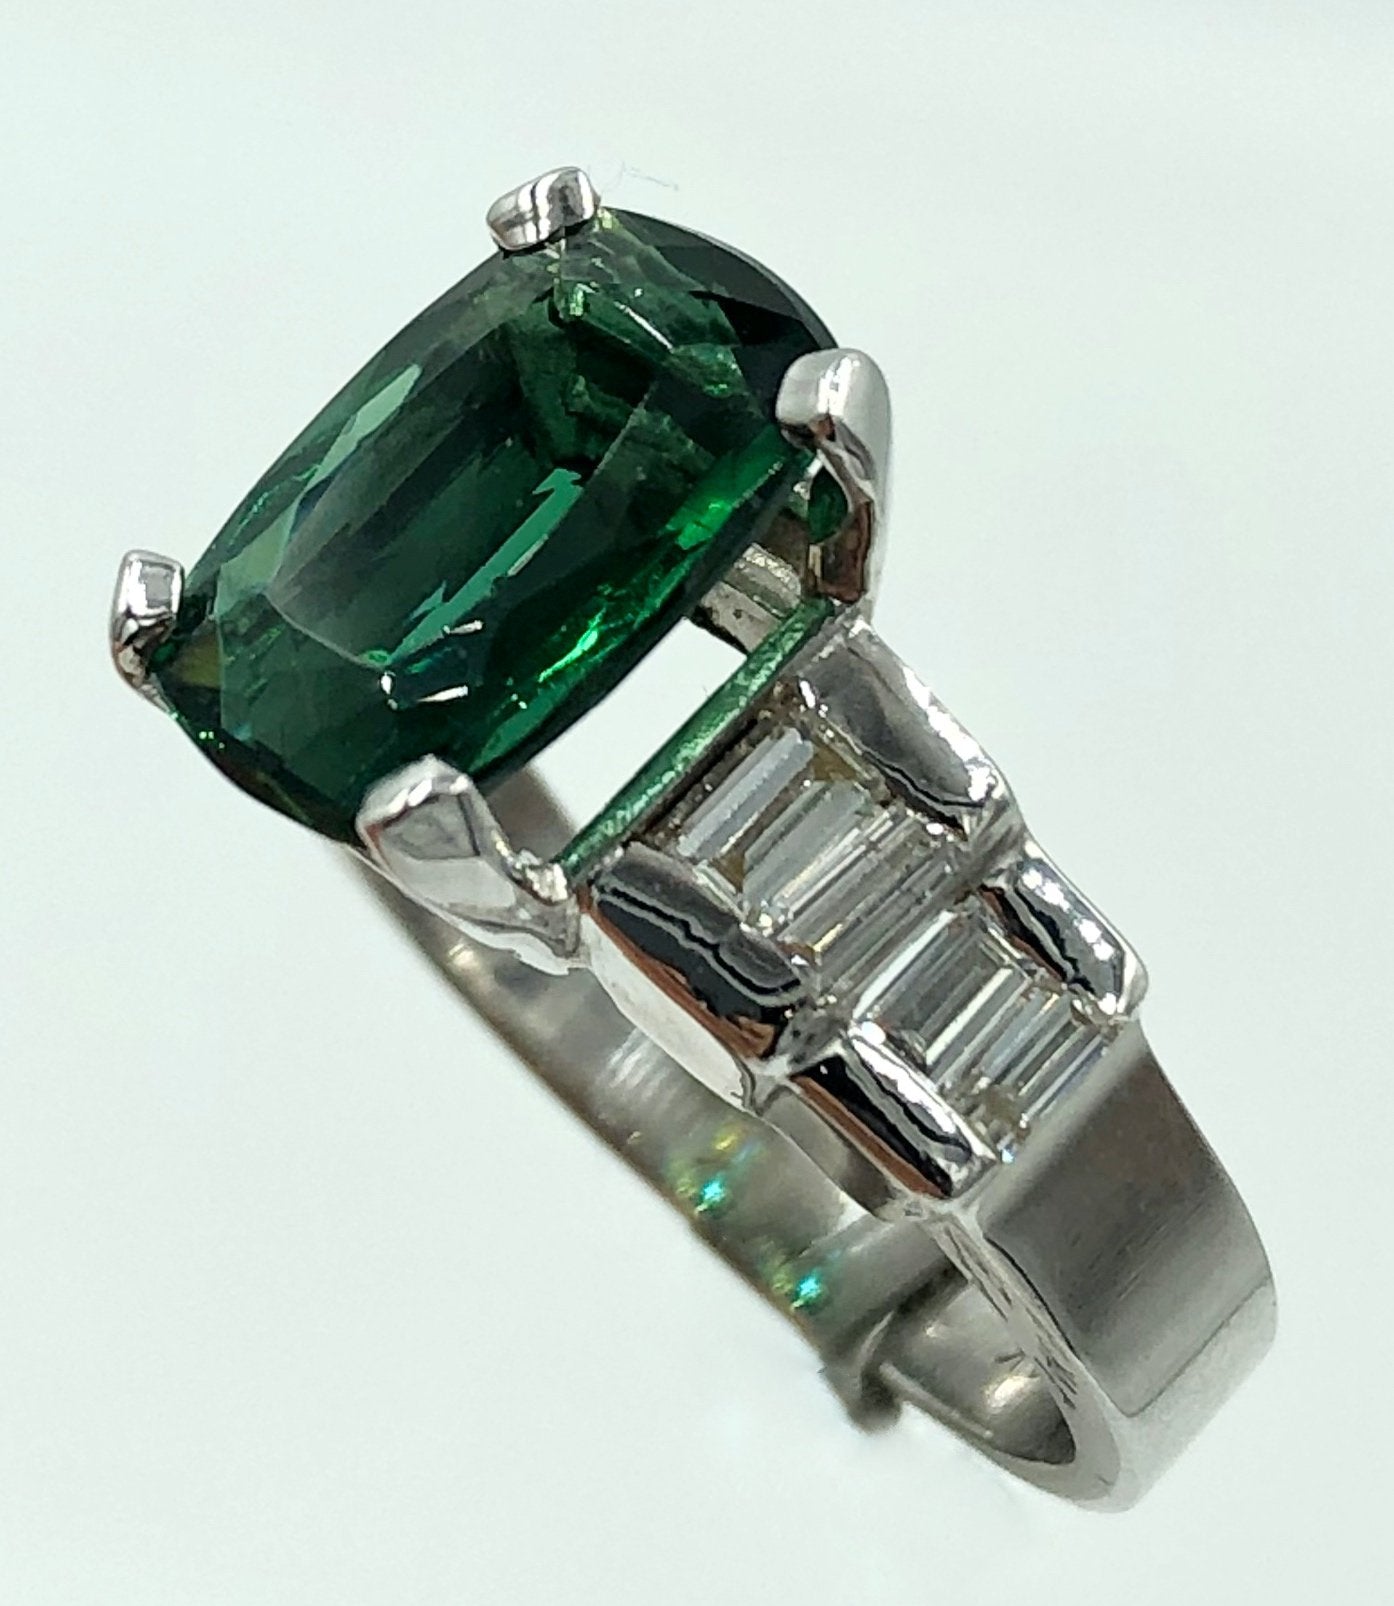 Fine Green 4.50 Carat Tourmaline Ring With Diamonds 14K Gold